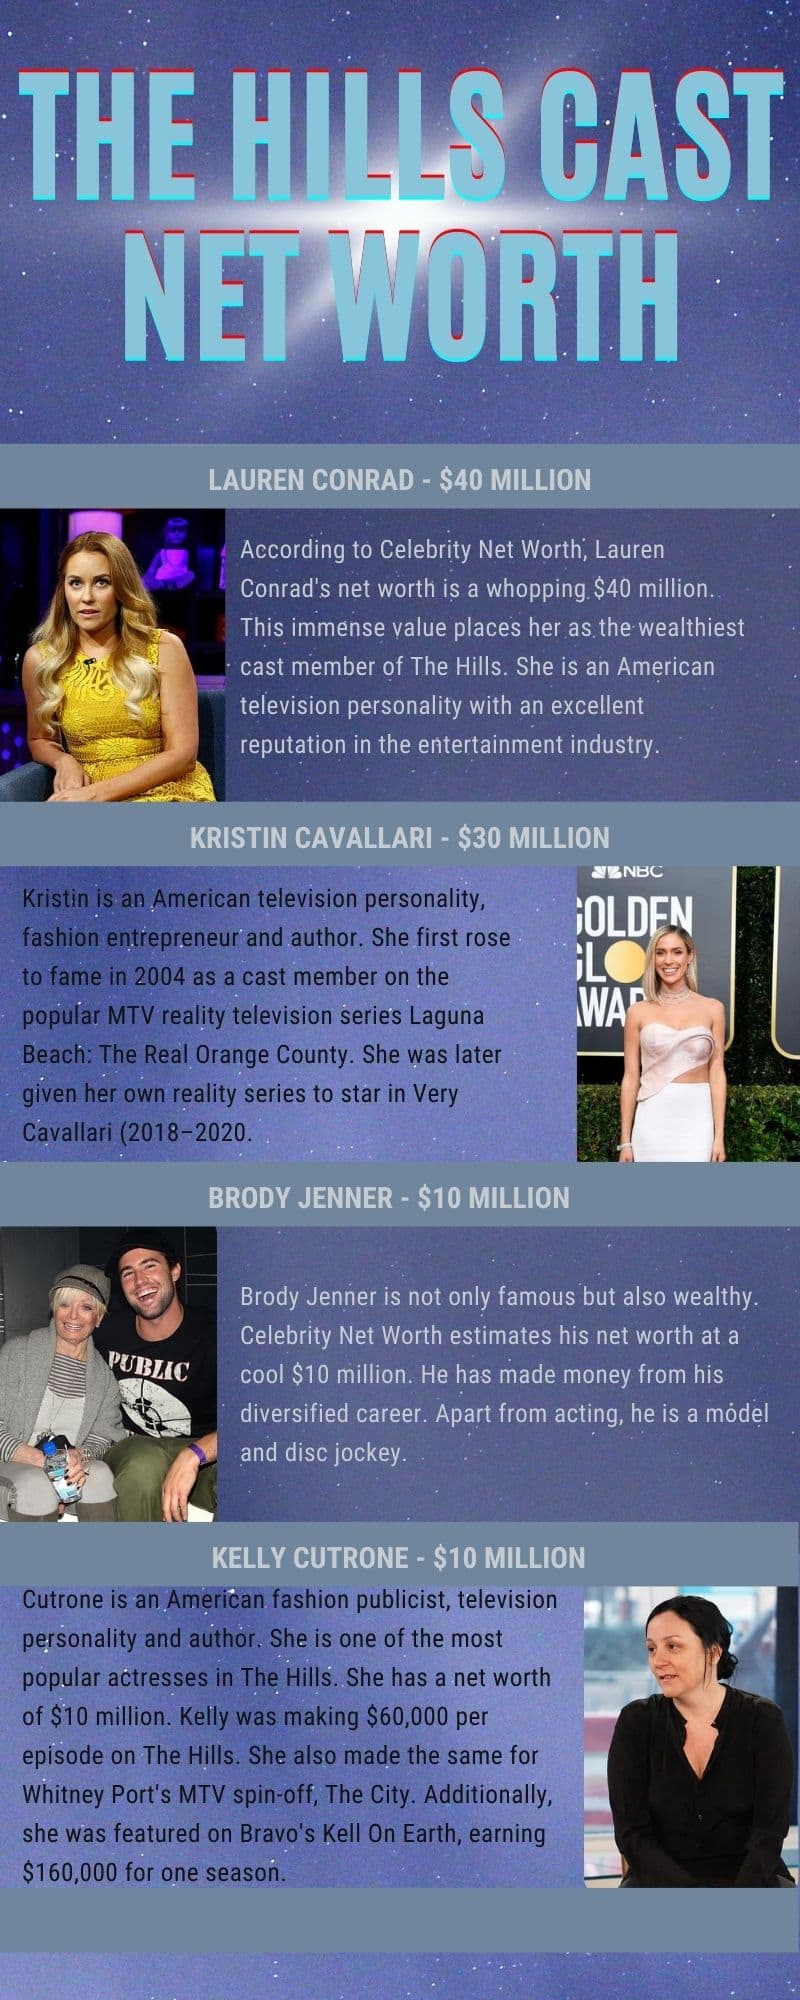 The Hills cast net worth